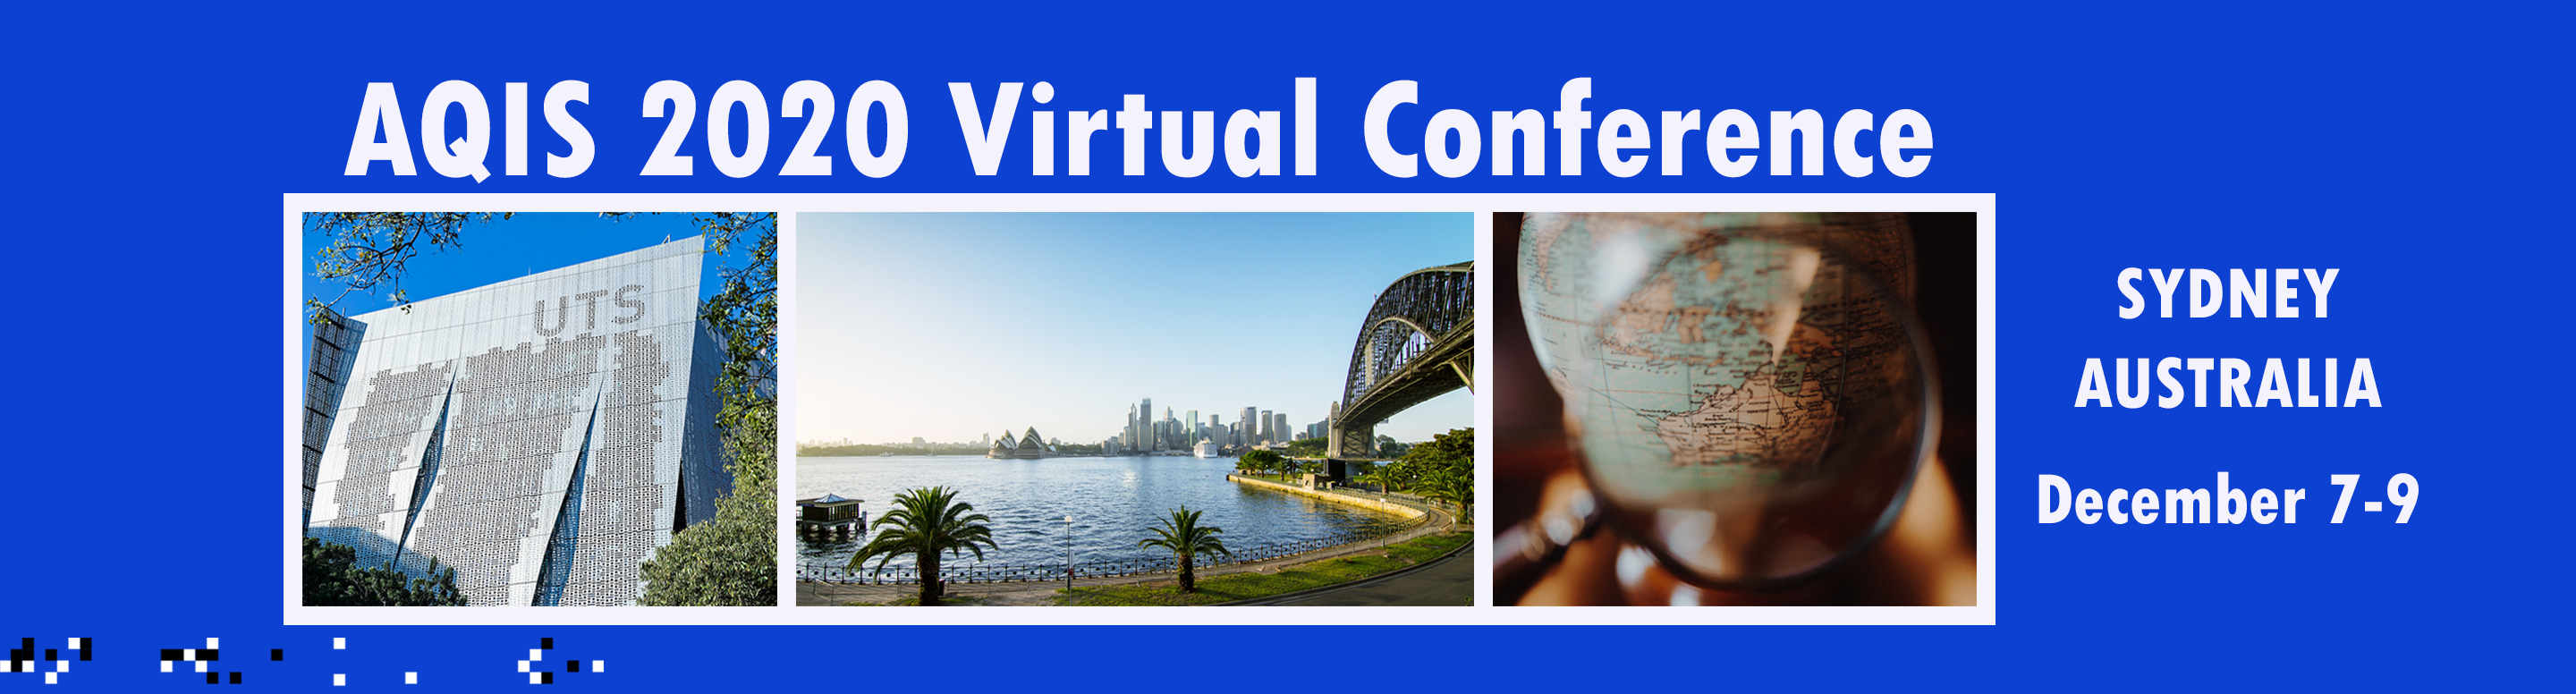 AQIS 2020 Virtual Conference